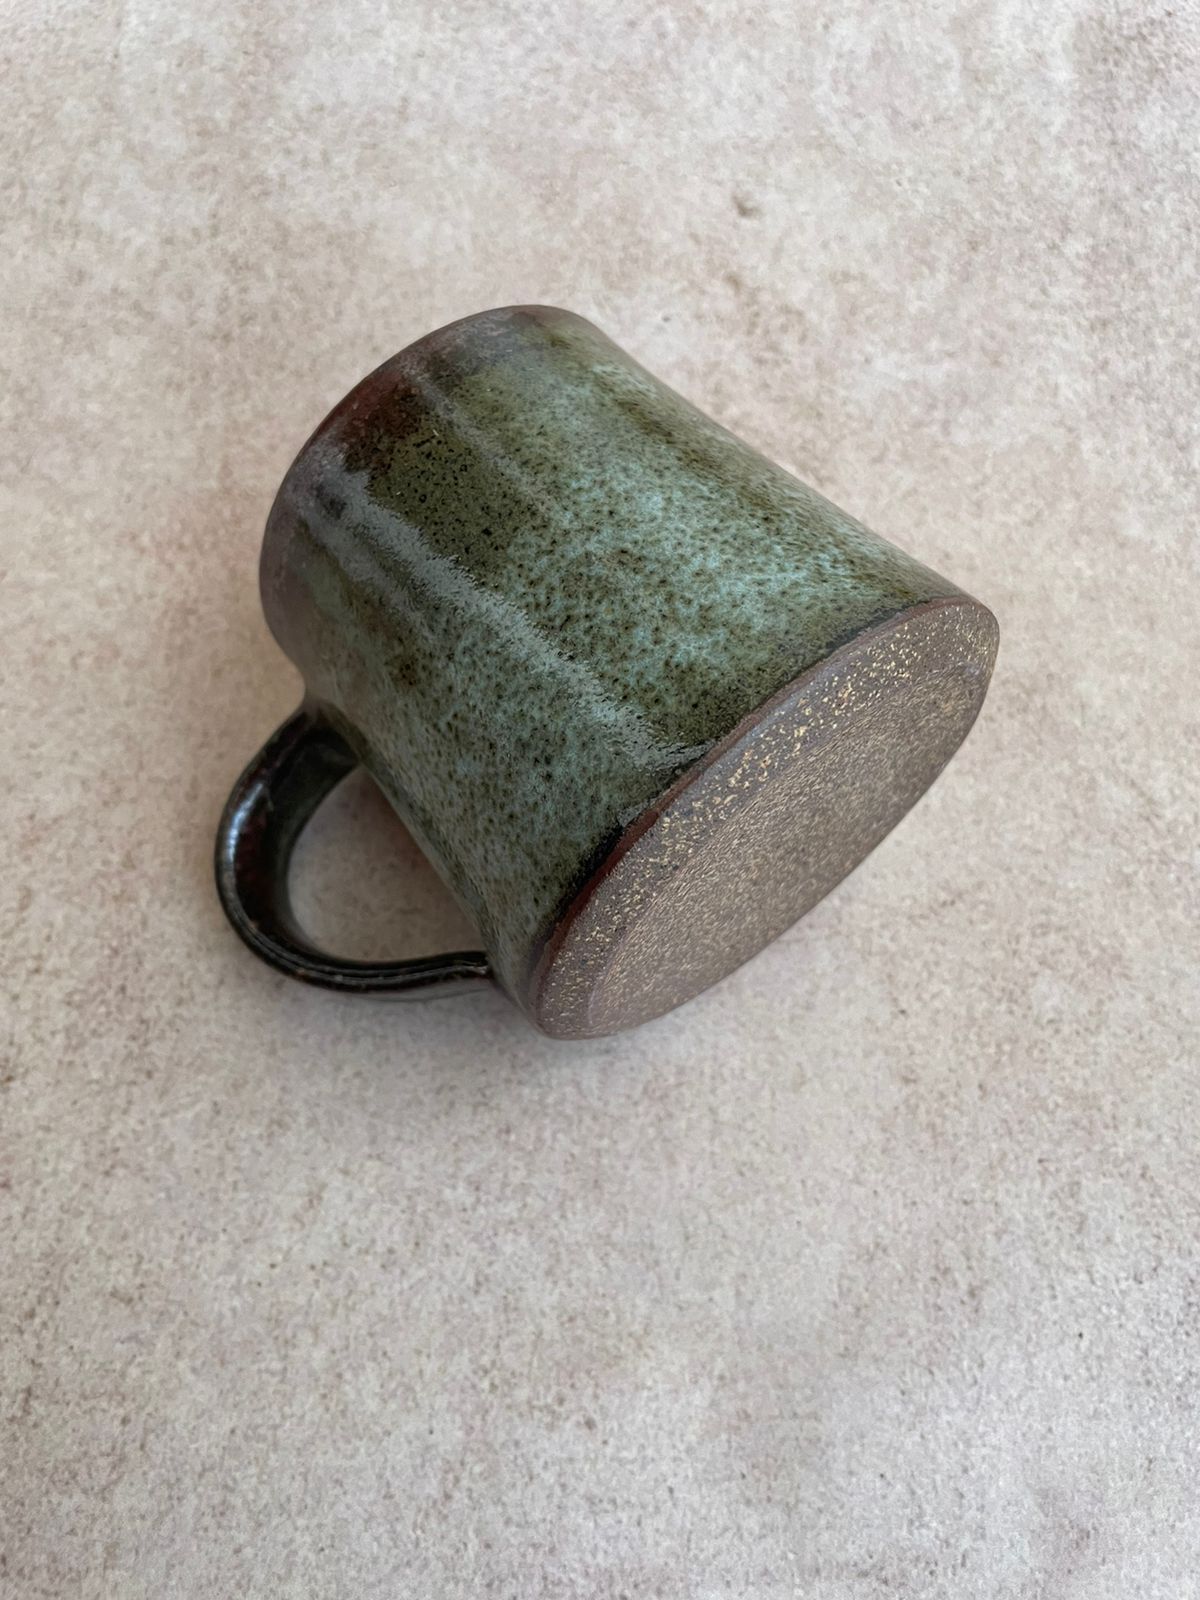 Rustic Olive Green Stoneware Pottery Mugs